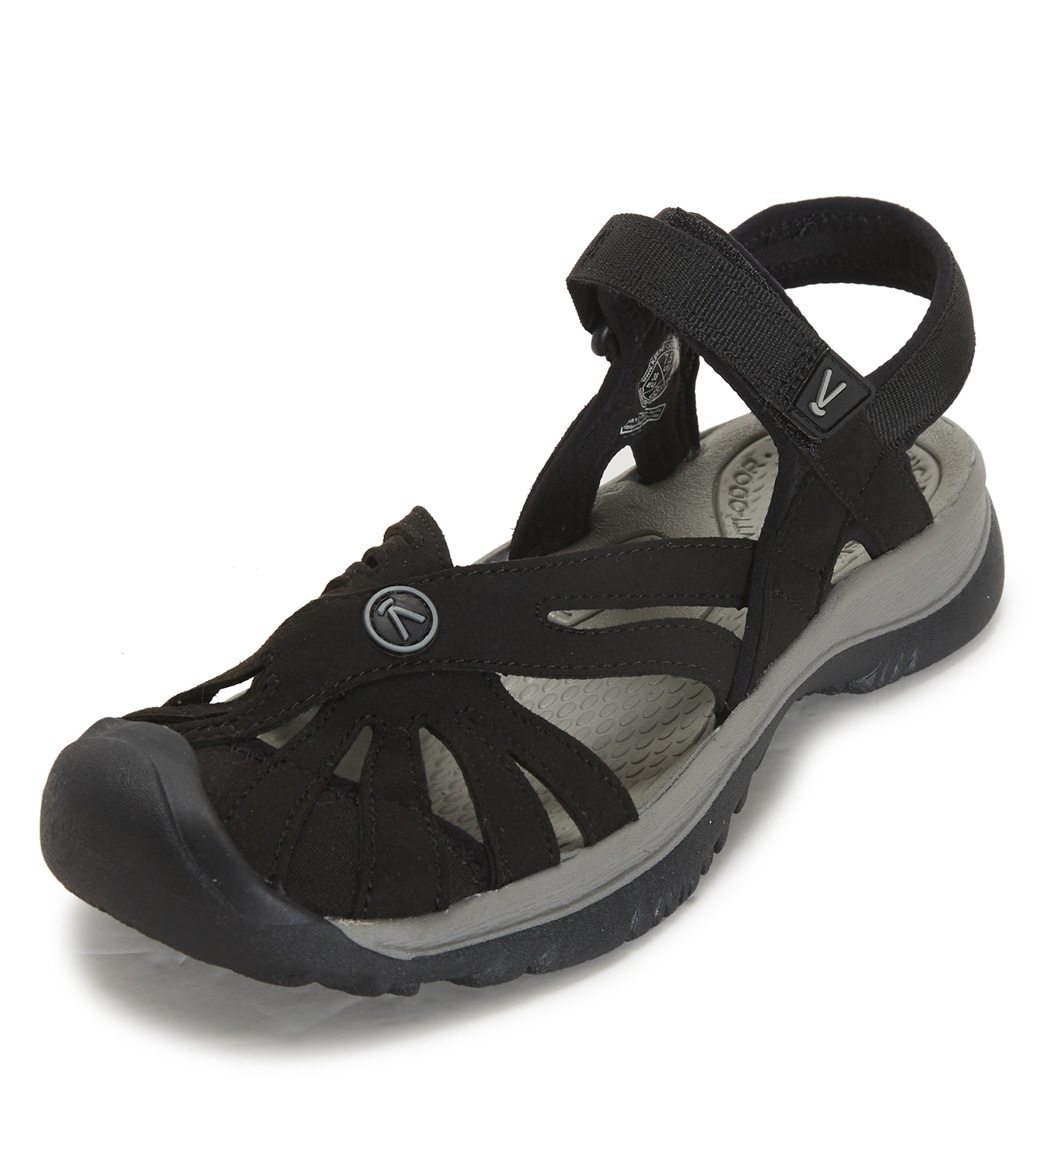 Keen Women's Rose Sandals - Black/Neutral Gray 11 - Swimoutlet.com